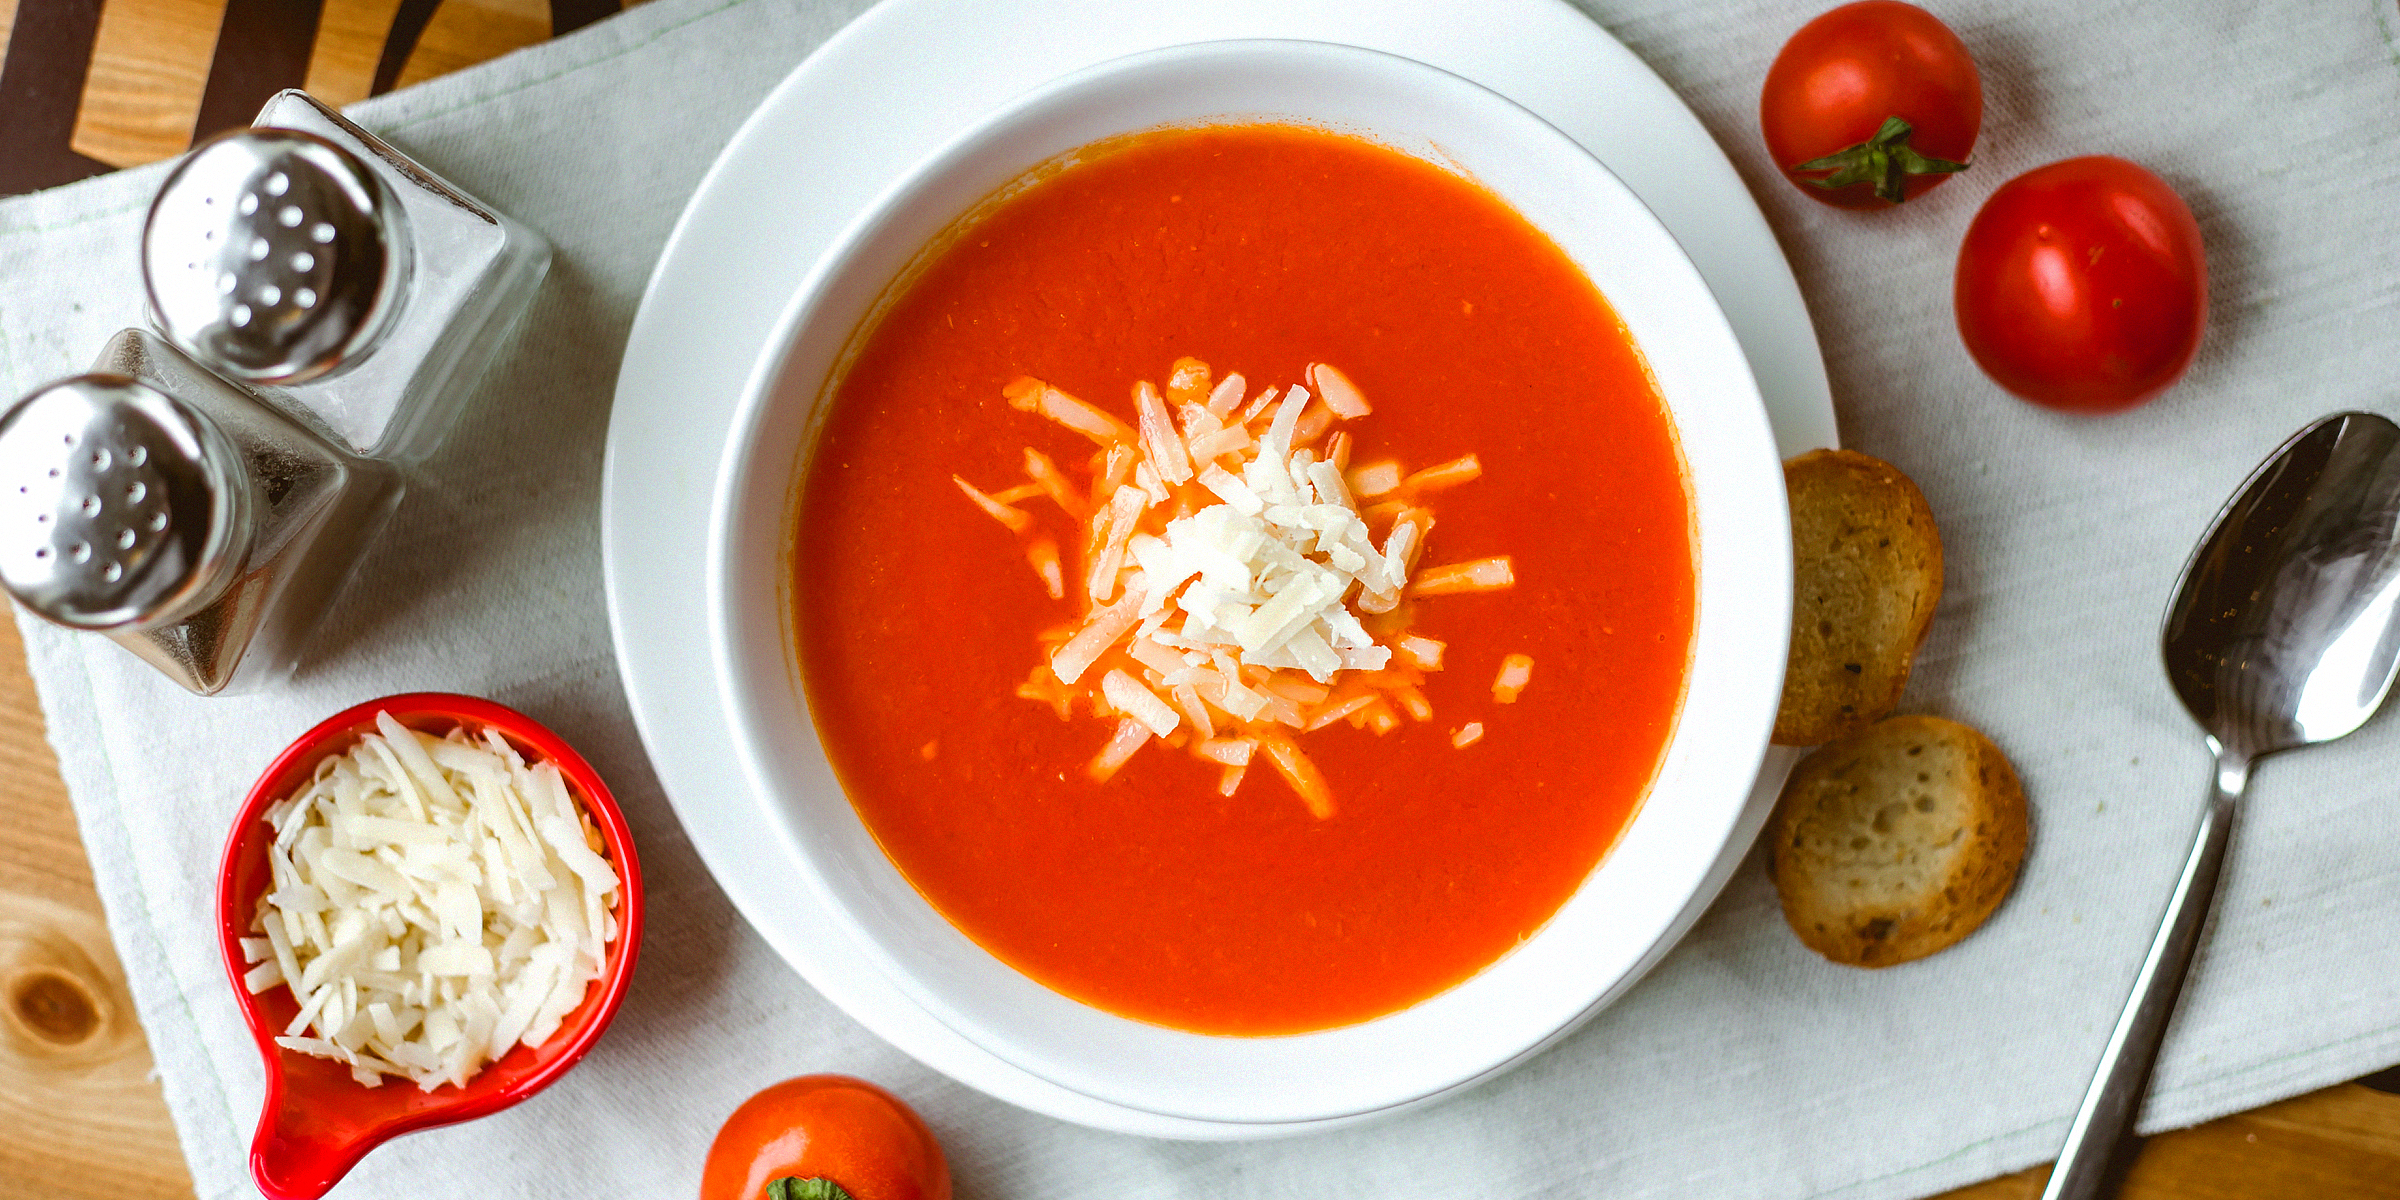 Nordstrom Tomato Soup | Source: Freepik